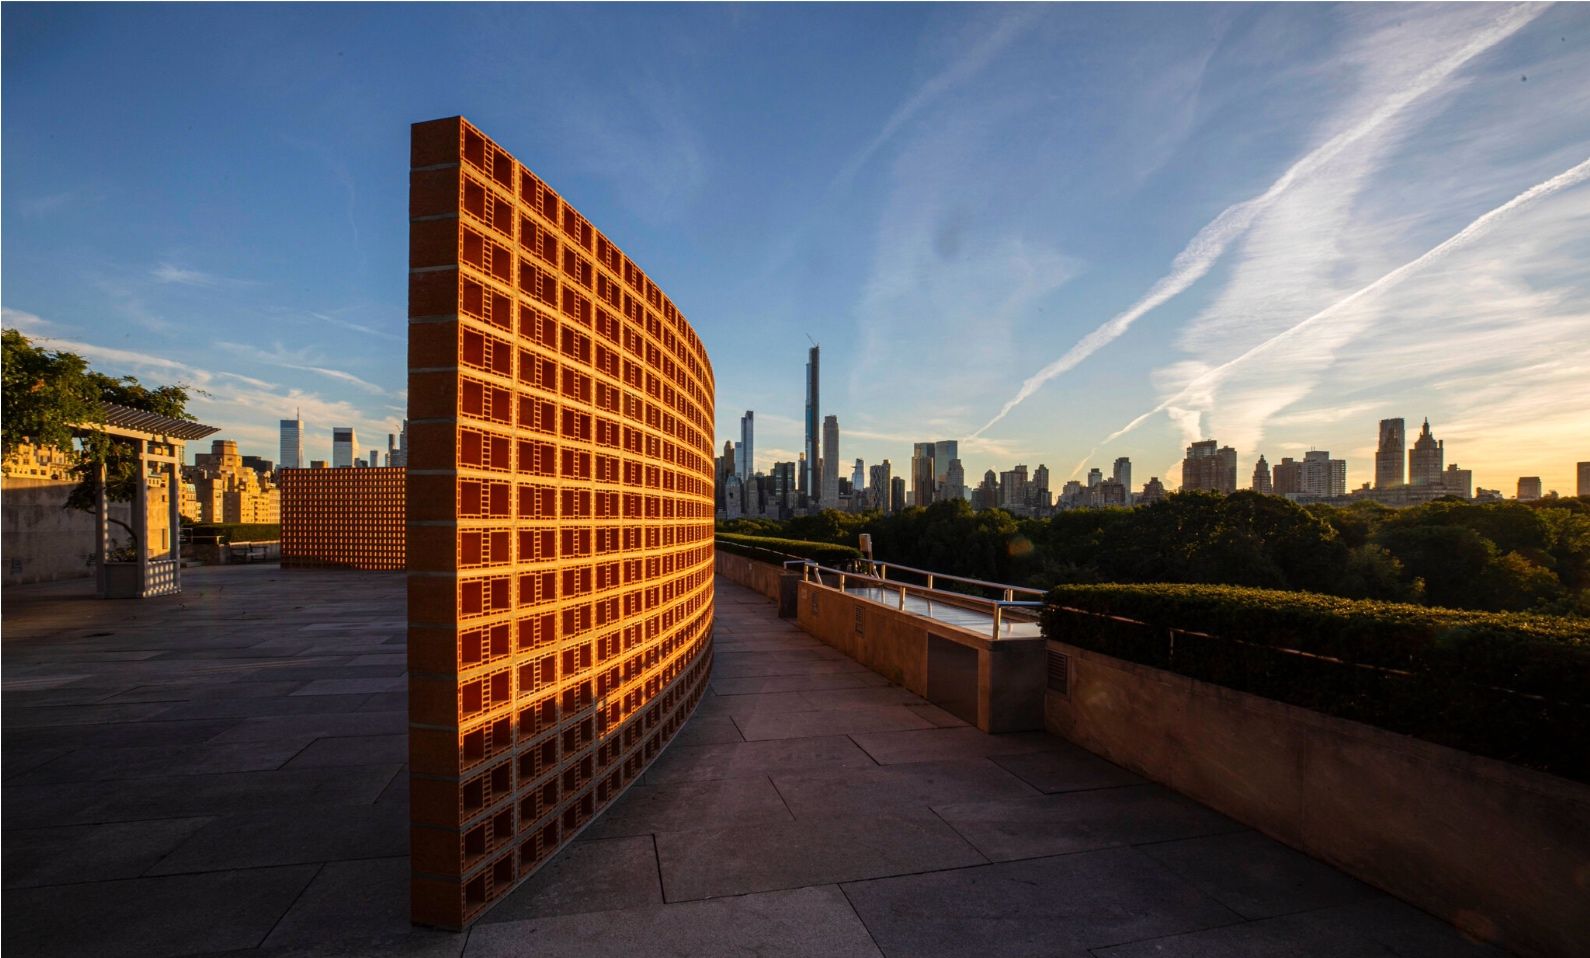 Hector Zamora, Lattice Detour | The Met Roof Garden Commission